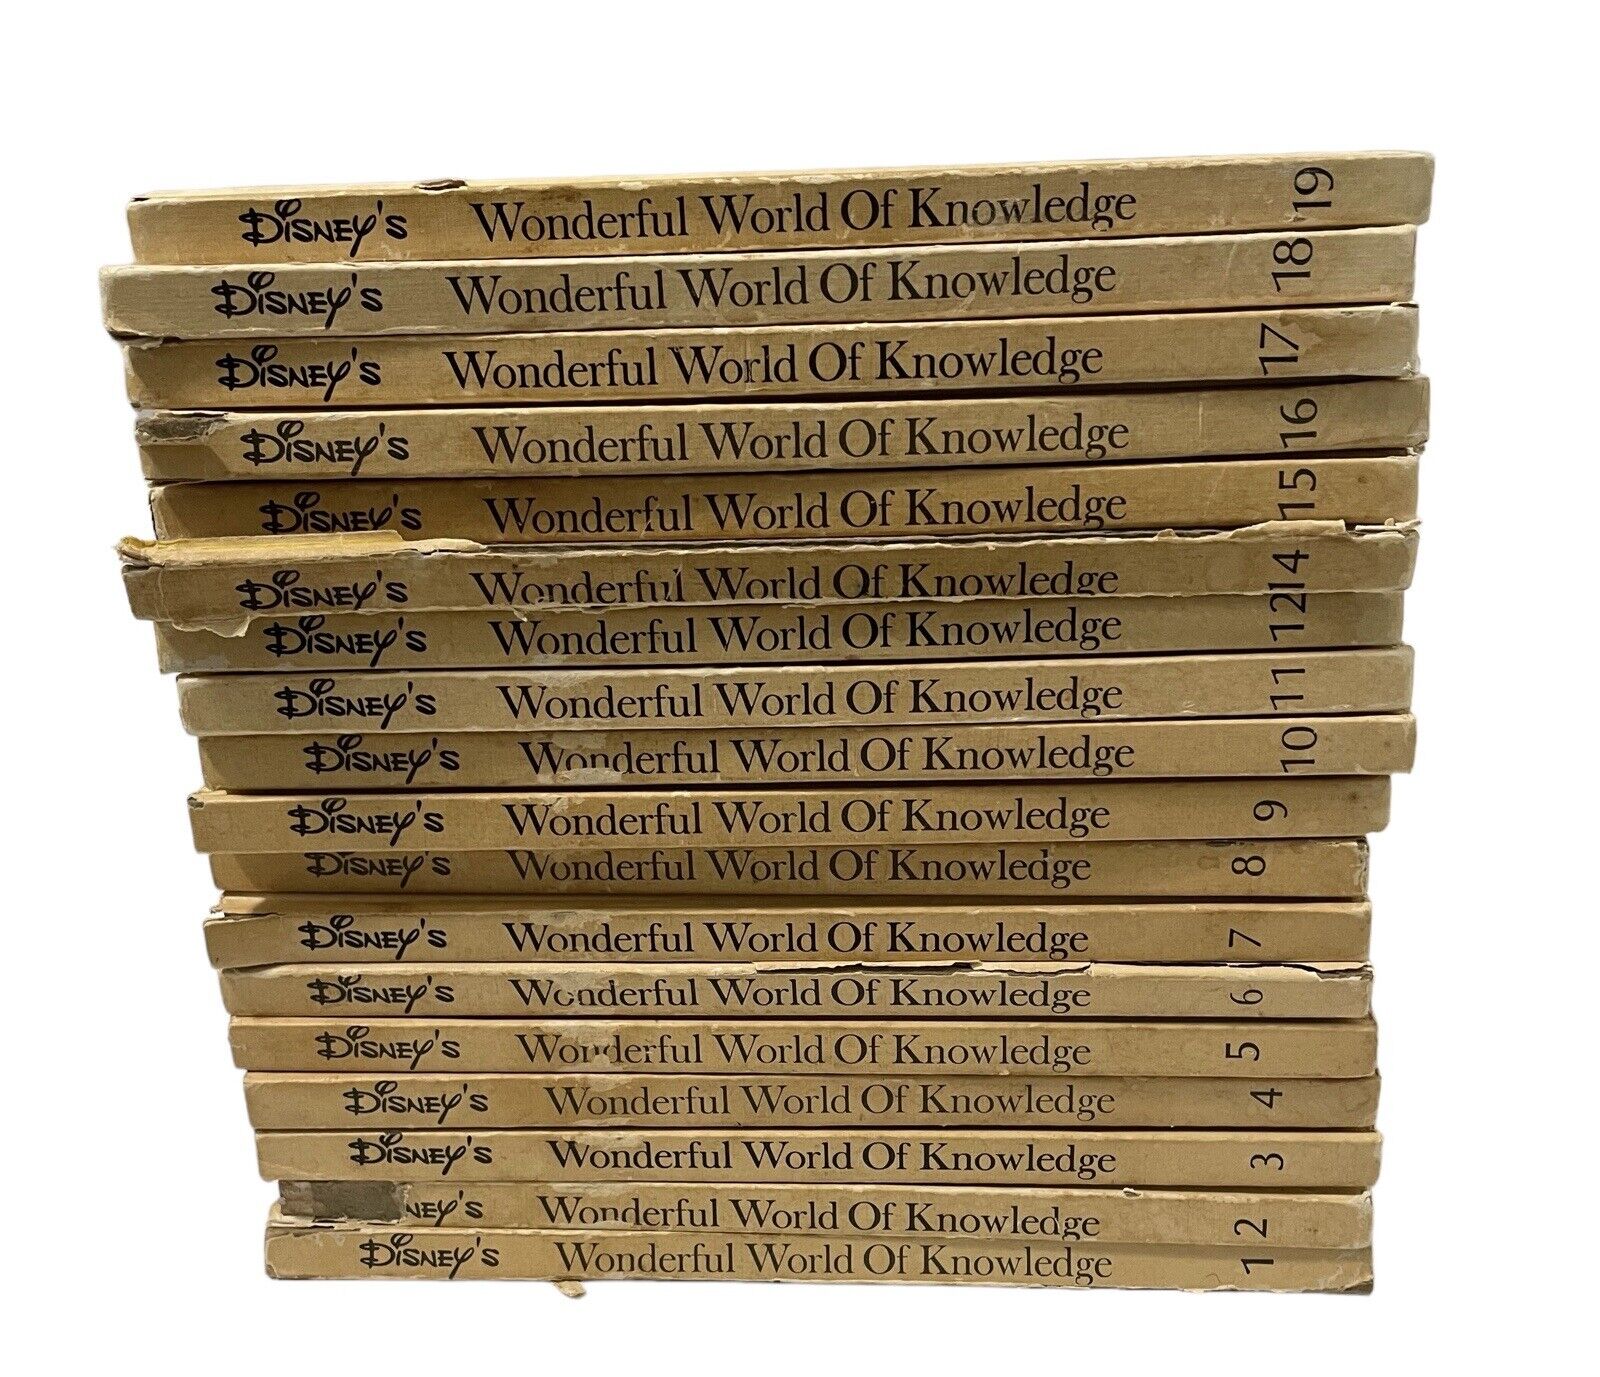 VTG DISNEY'S Wonderful World Of Knowledge 1973 (Volumes 13 & 20 Missing)